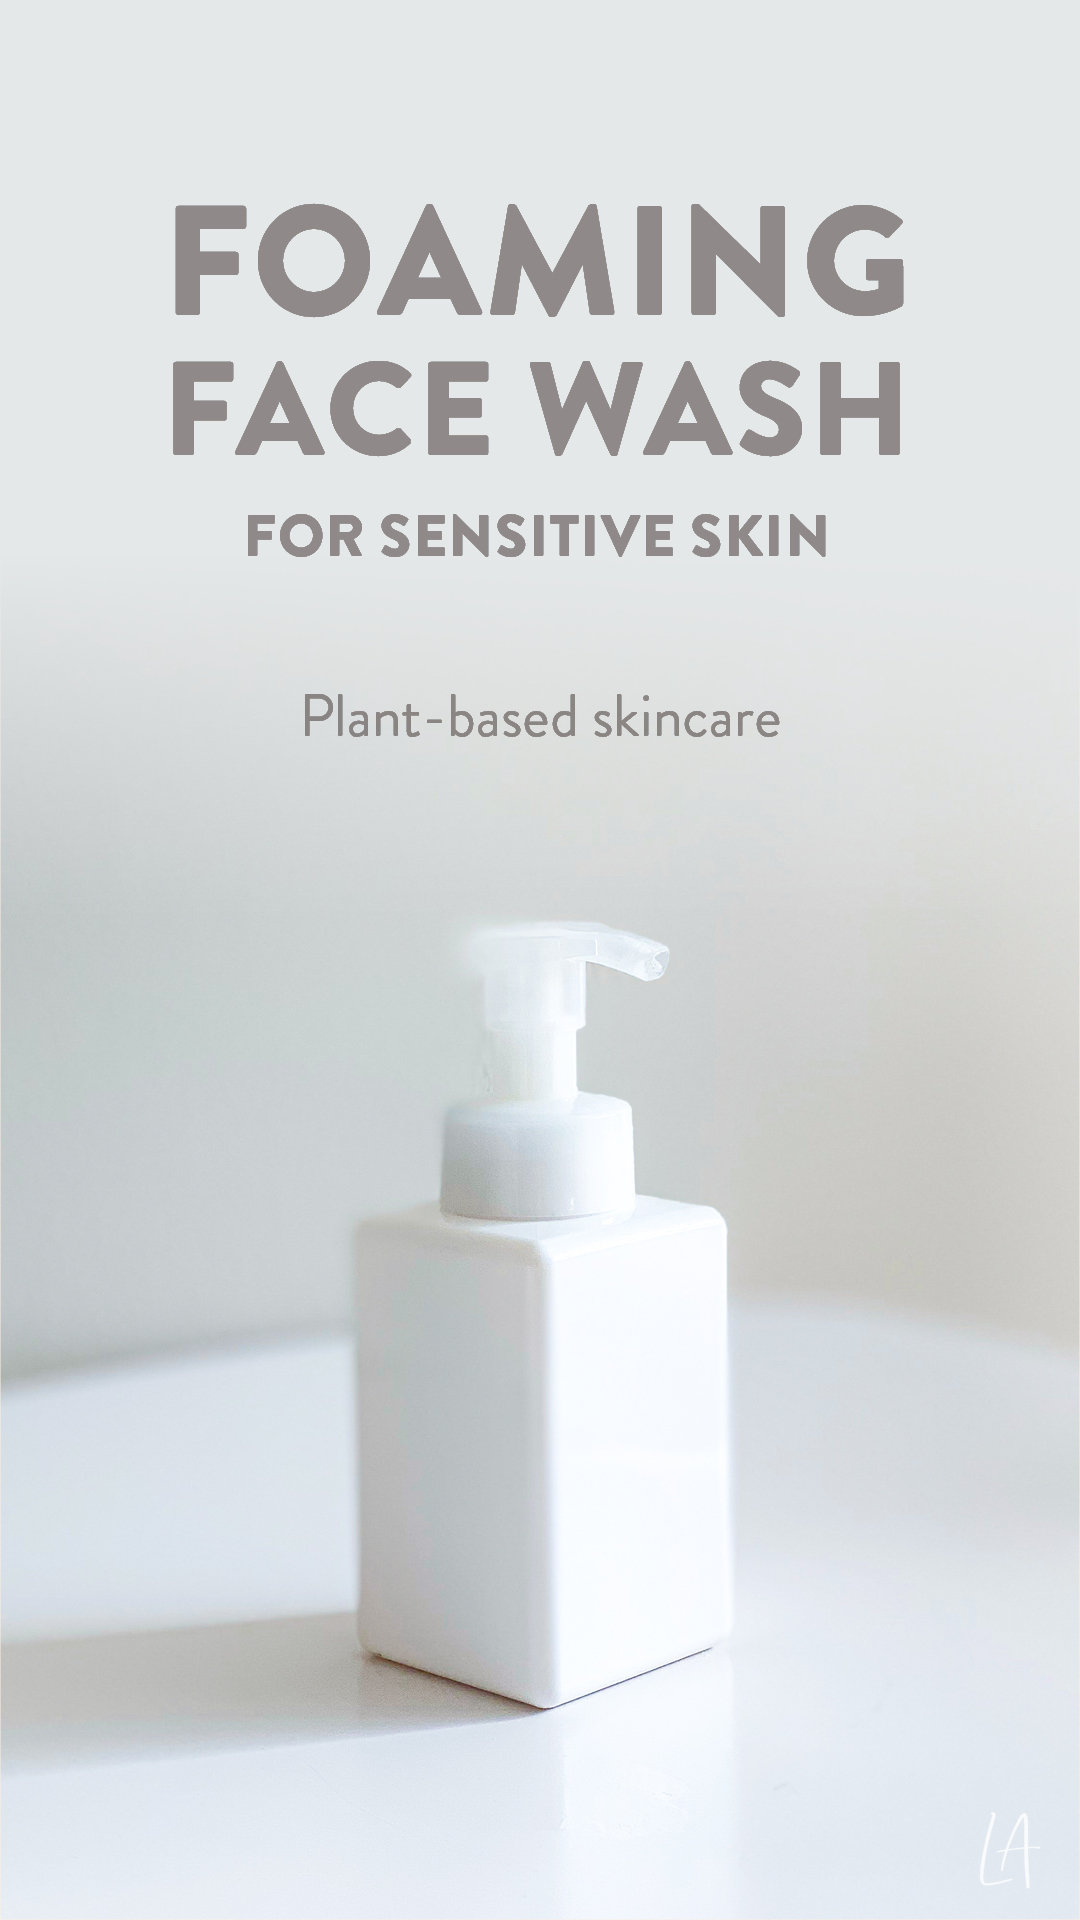 Foaming face wash for sensitive skin | Plant-based skincare